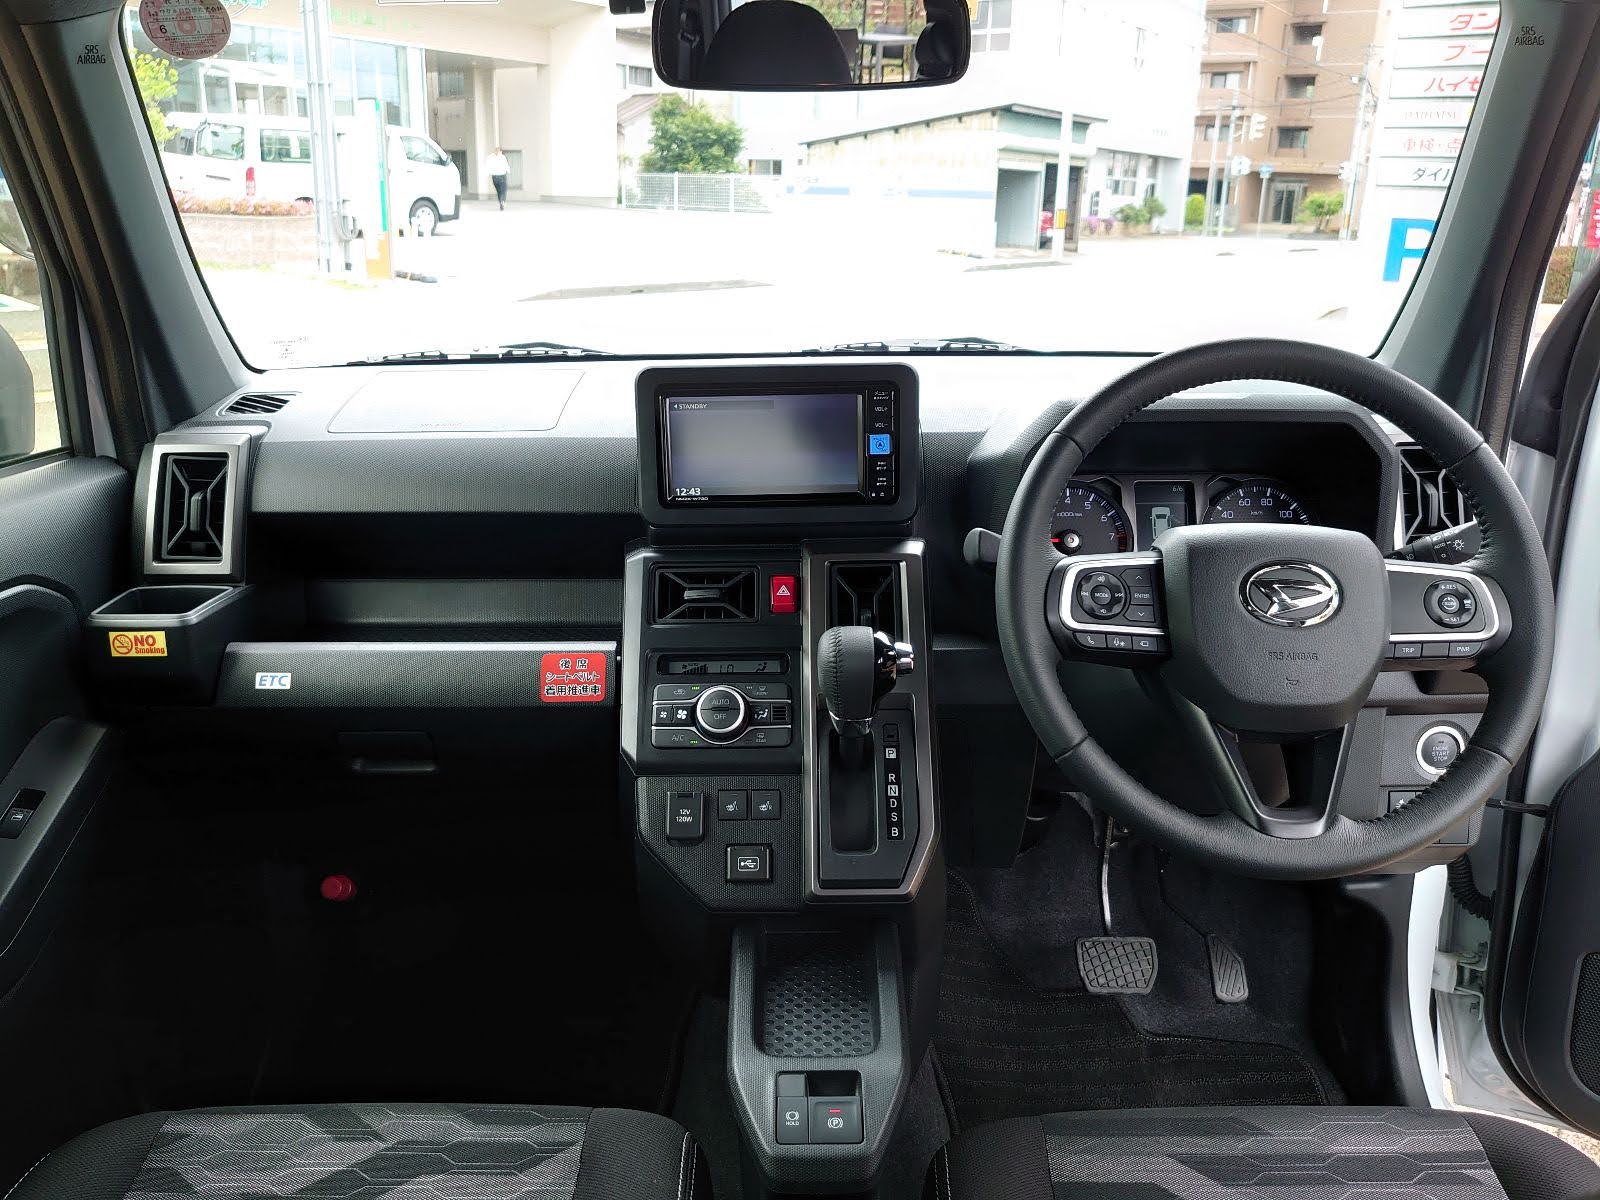 Daihatsu taft steering wheel dash